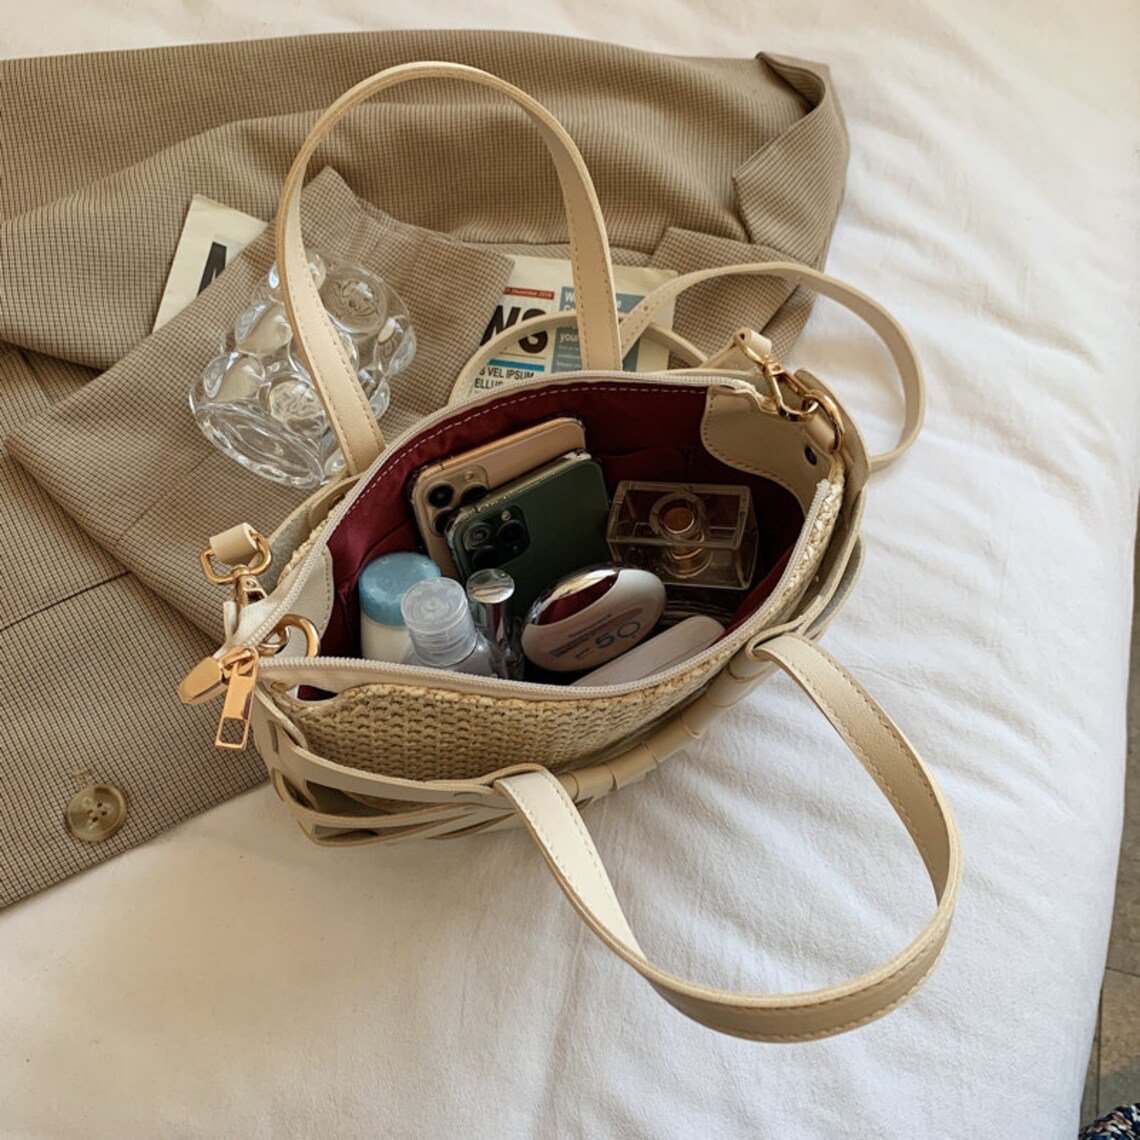 Straw Leather Hand-woven Ladies Handbags 2021 Summer New | Etsy